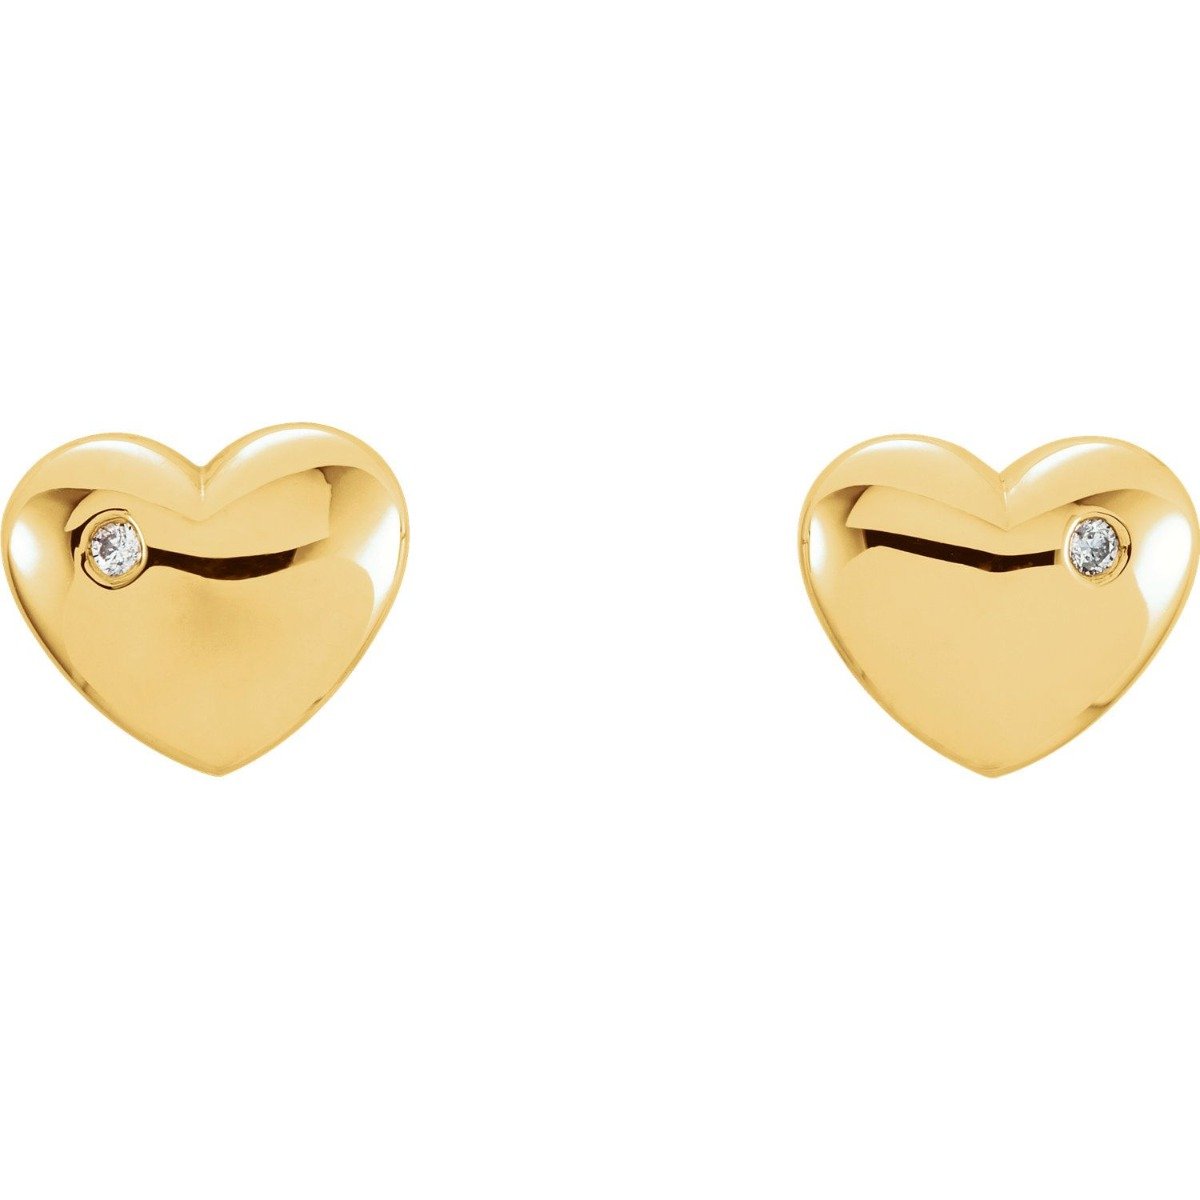 14KT DIAMOND HEART EARRINGS 14KT Gold / Rose,14KT Gold / White,14KT Gold / Yellow,Sterling Silver / Silver